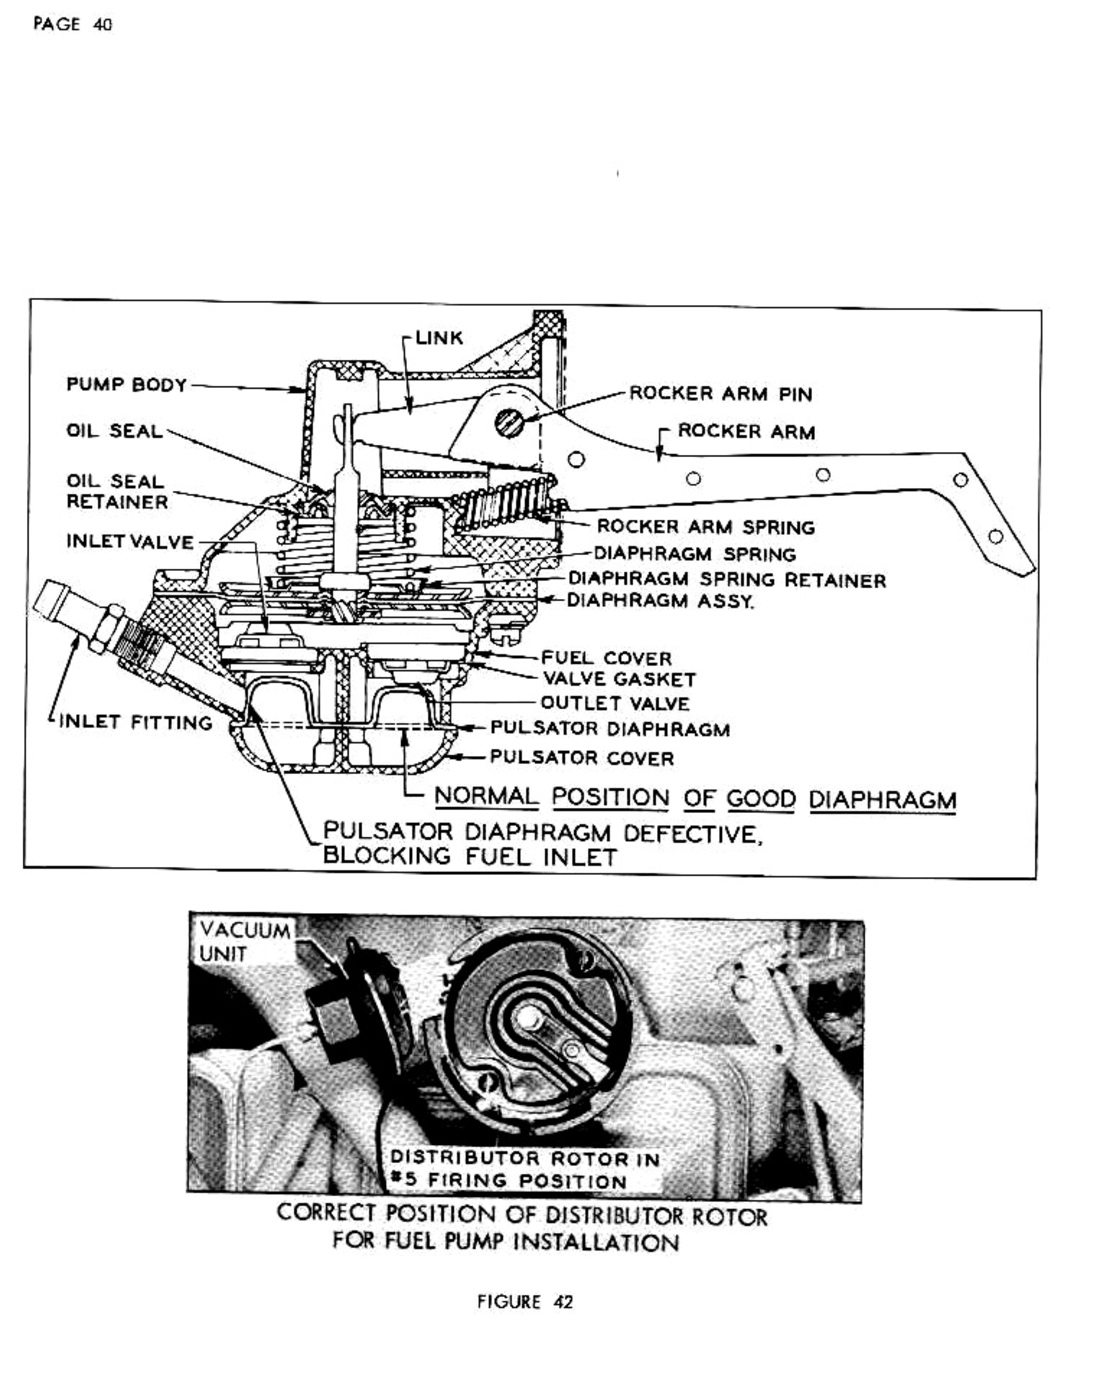 n_1957 Buick Product Service  Bulletins-046-046.jpg